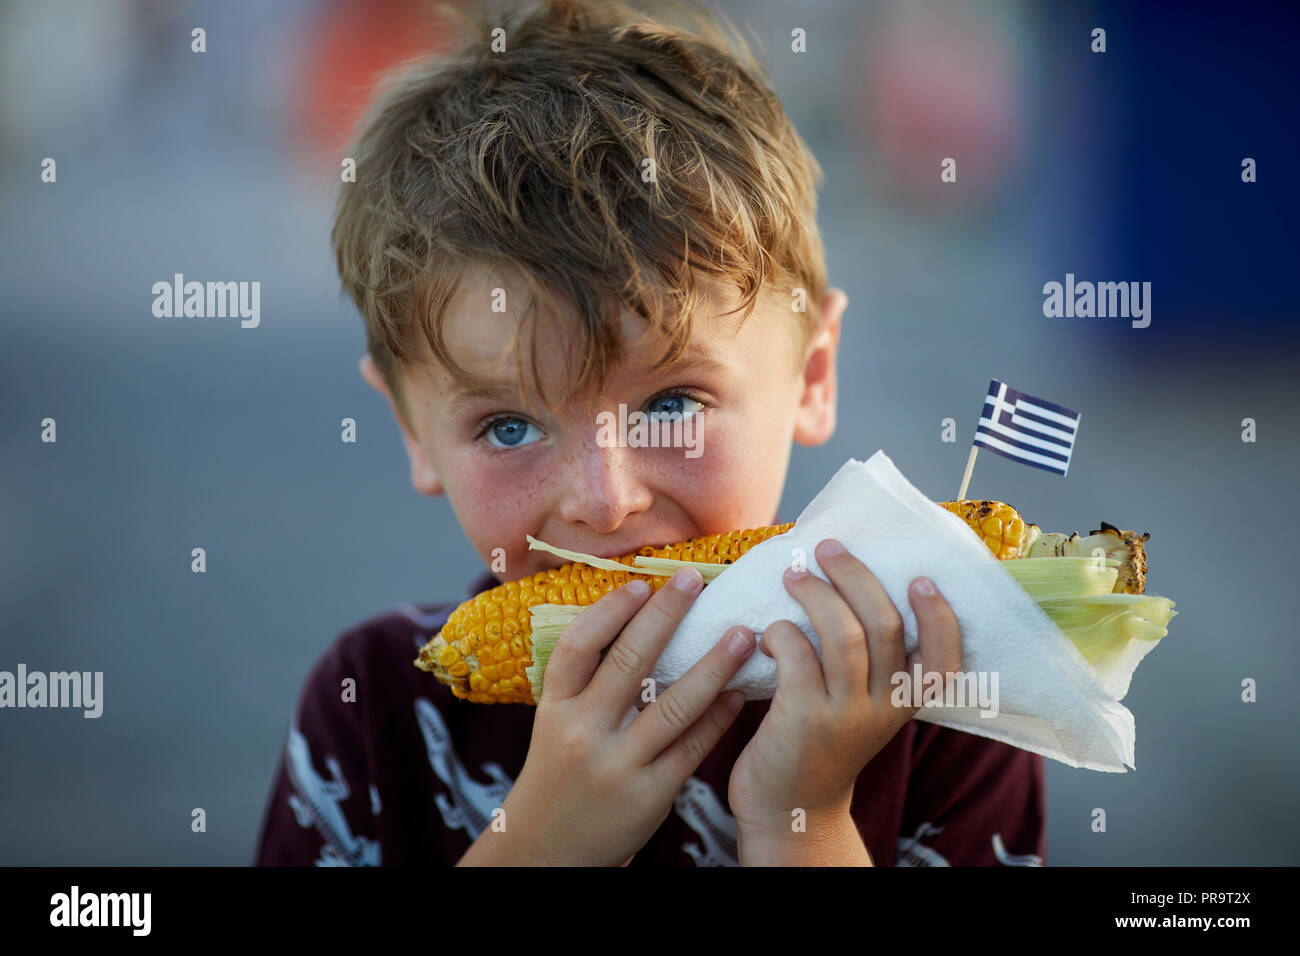 A boy eating Greek street food  corn on the cob in Greece,Santorini, Cyclades group of islands Stock Photo